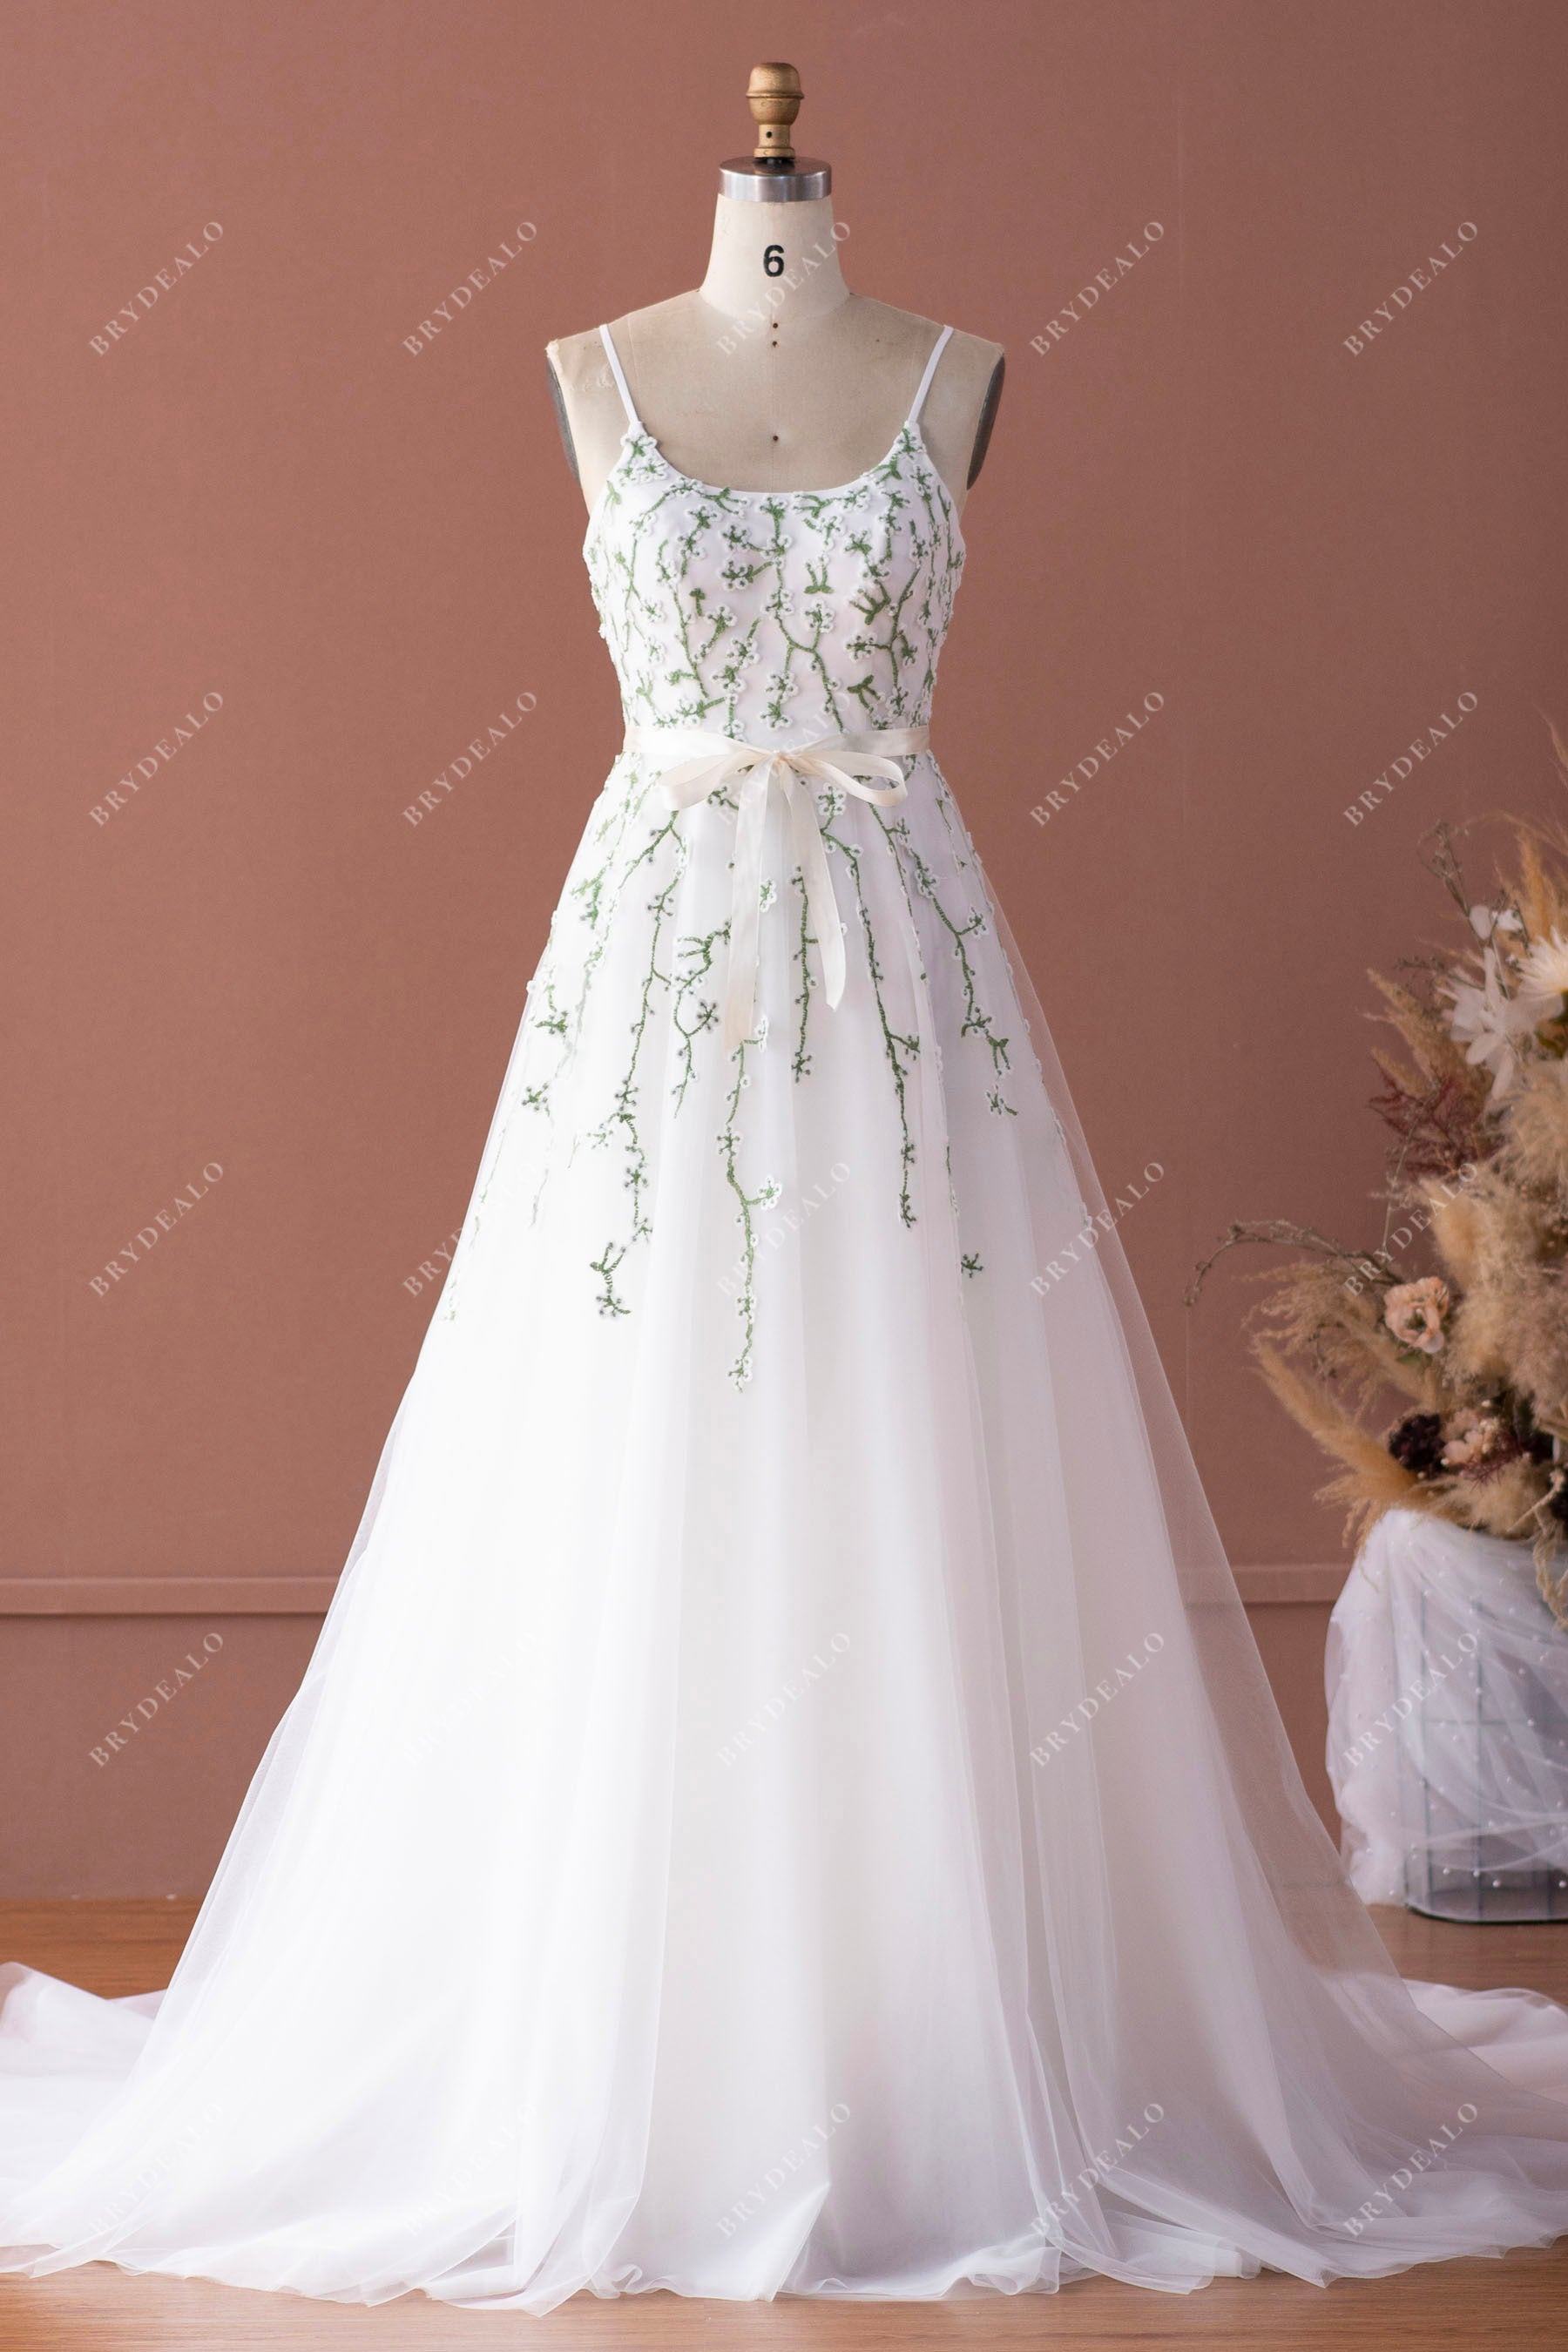 straps rustic lace A-line wedding dress